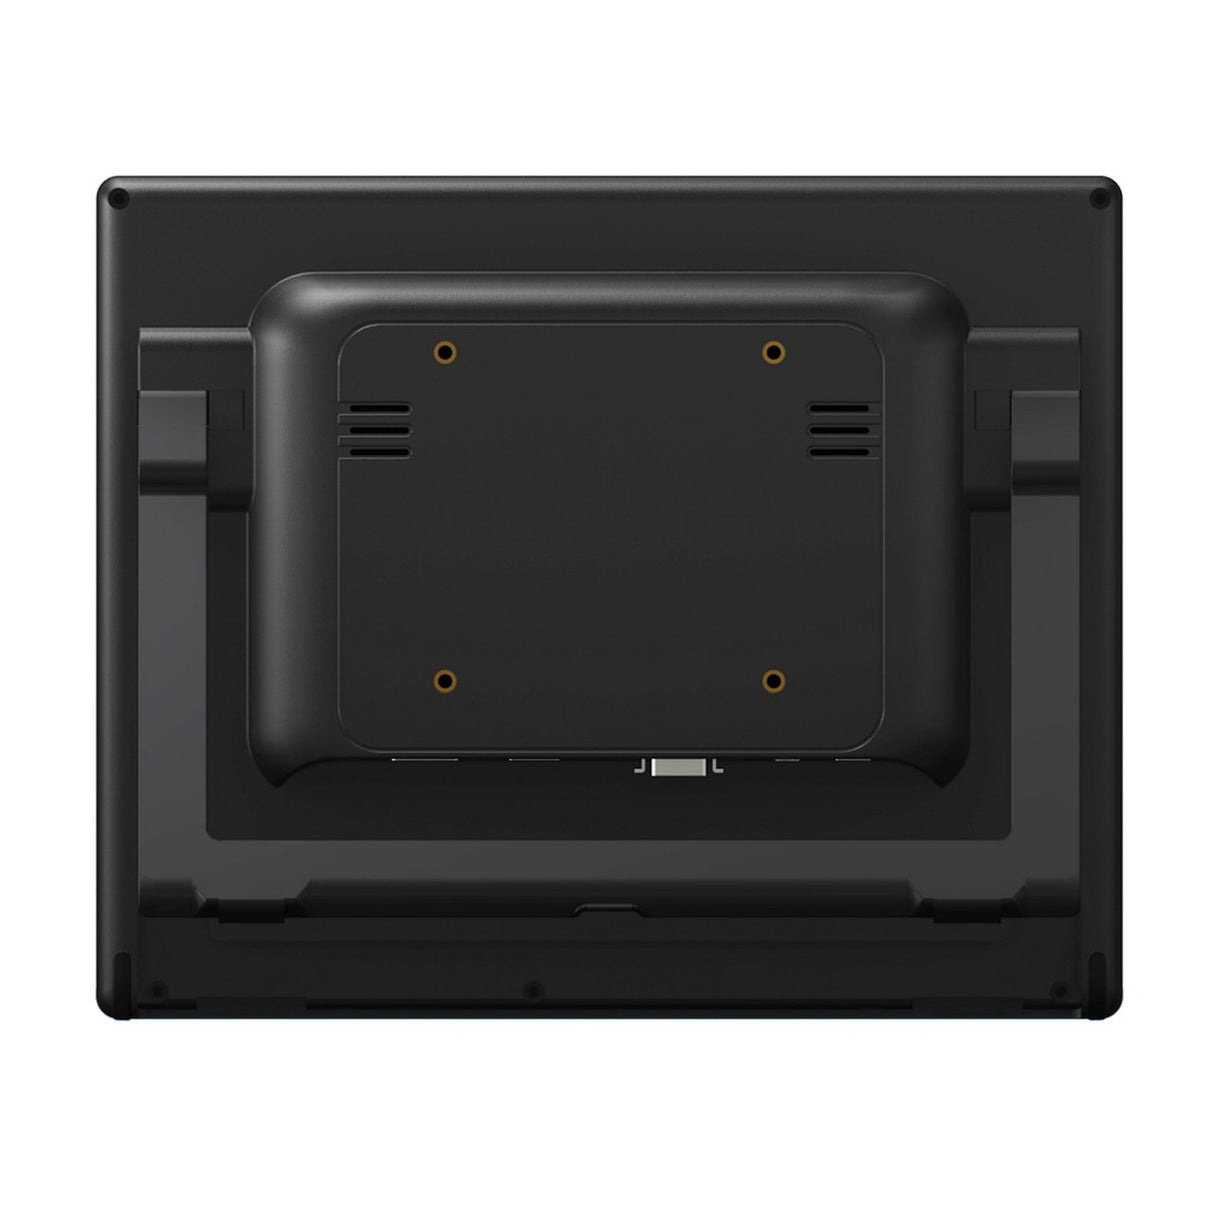 Lilliput FA1000-NP/C | 9.7 Inch LED HDMI Non Touch Screen Monitor